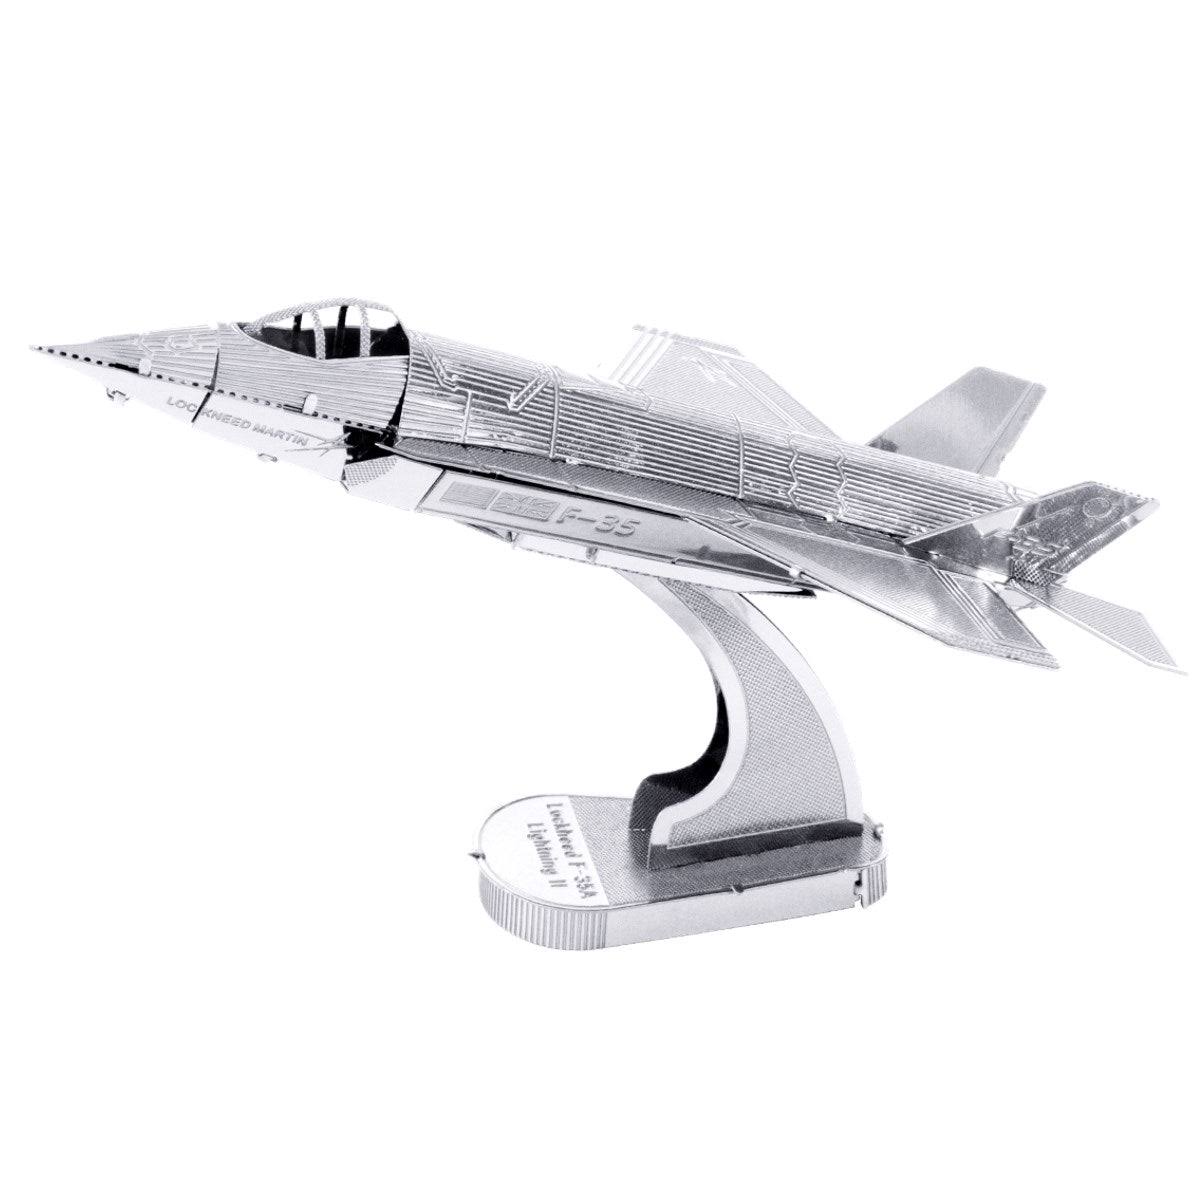 Fascinations Metal Earth F-35A Lightning II Airplane 3D Metal Model Kit